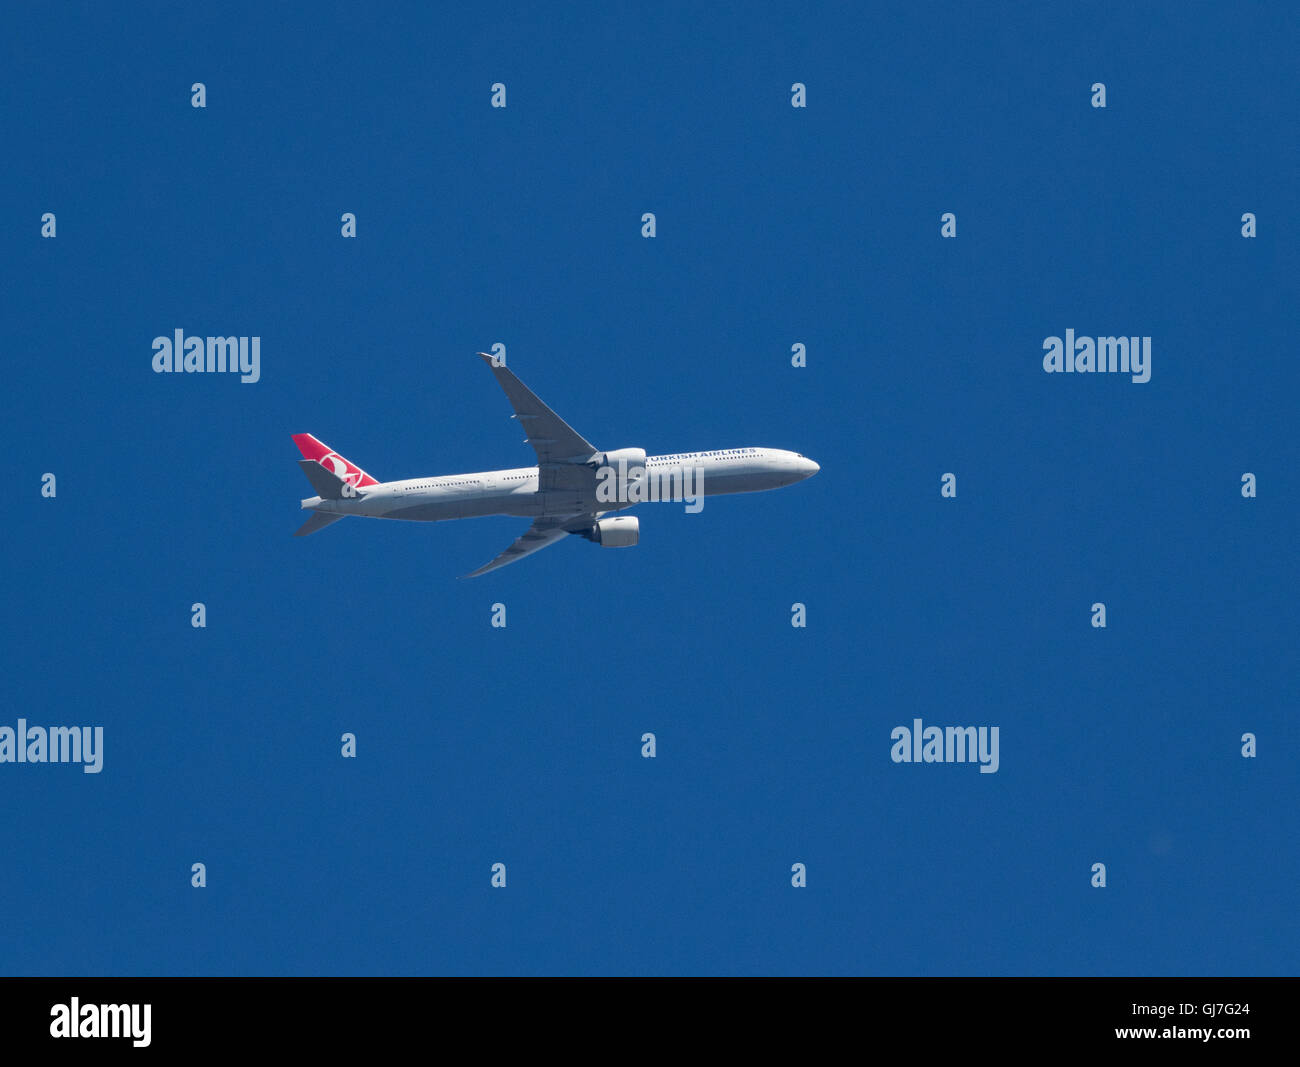 Passenger aeroplane of Stock Photo